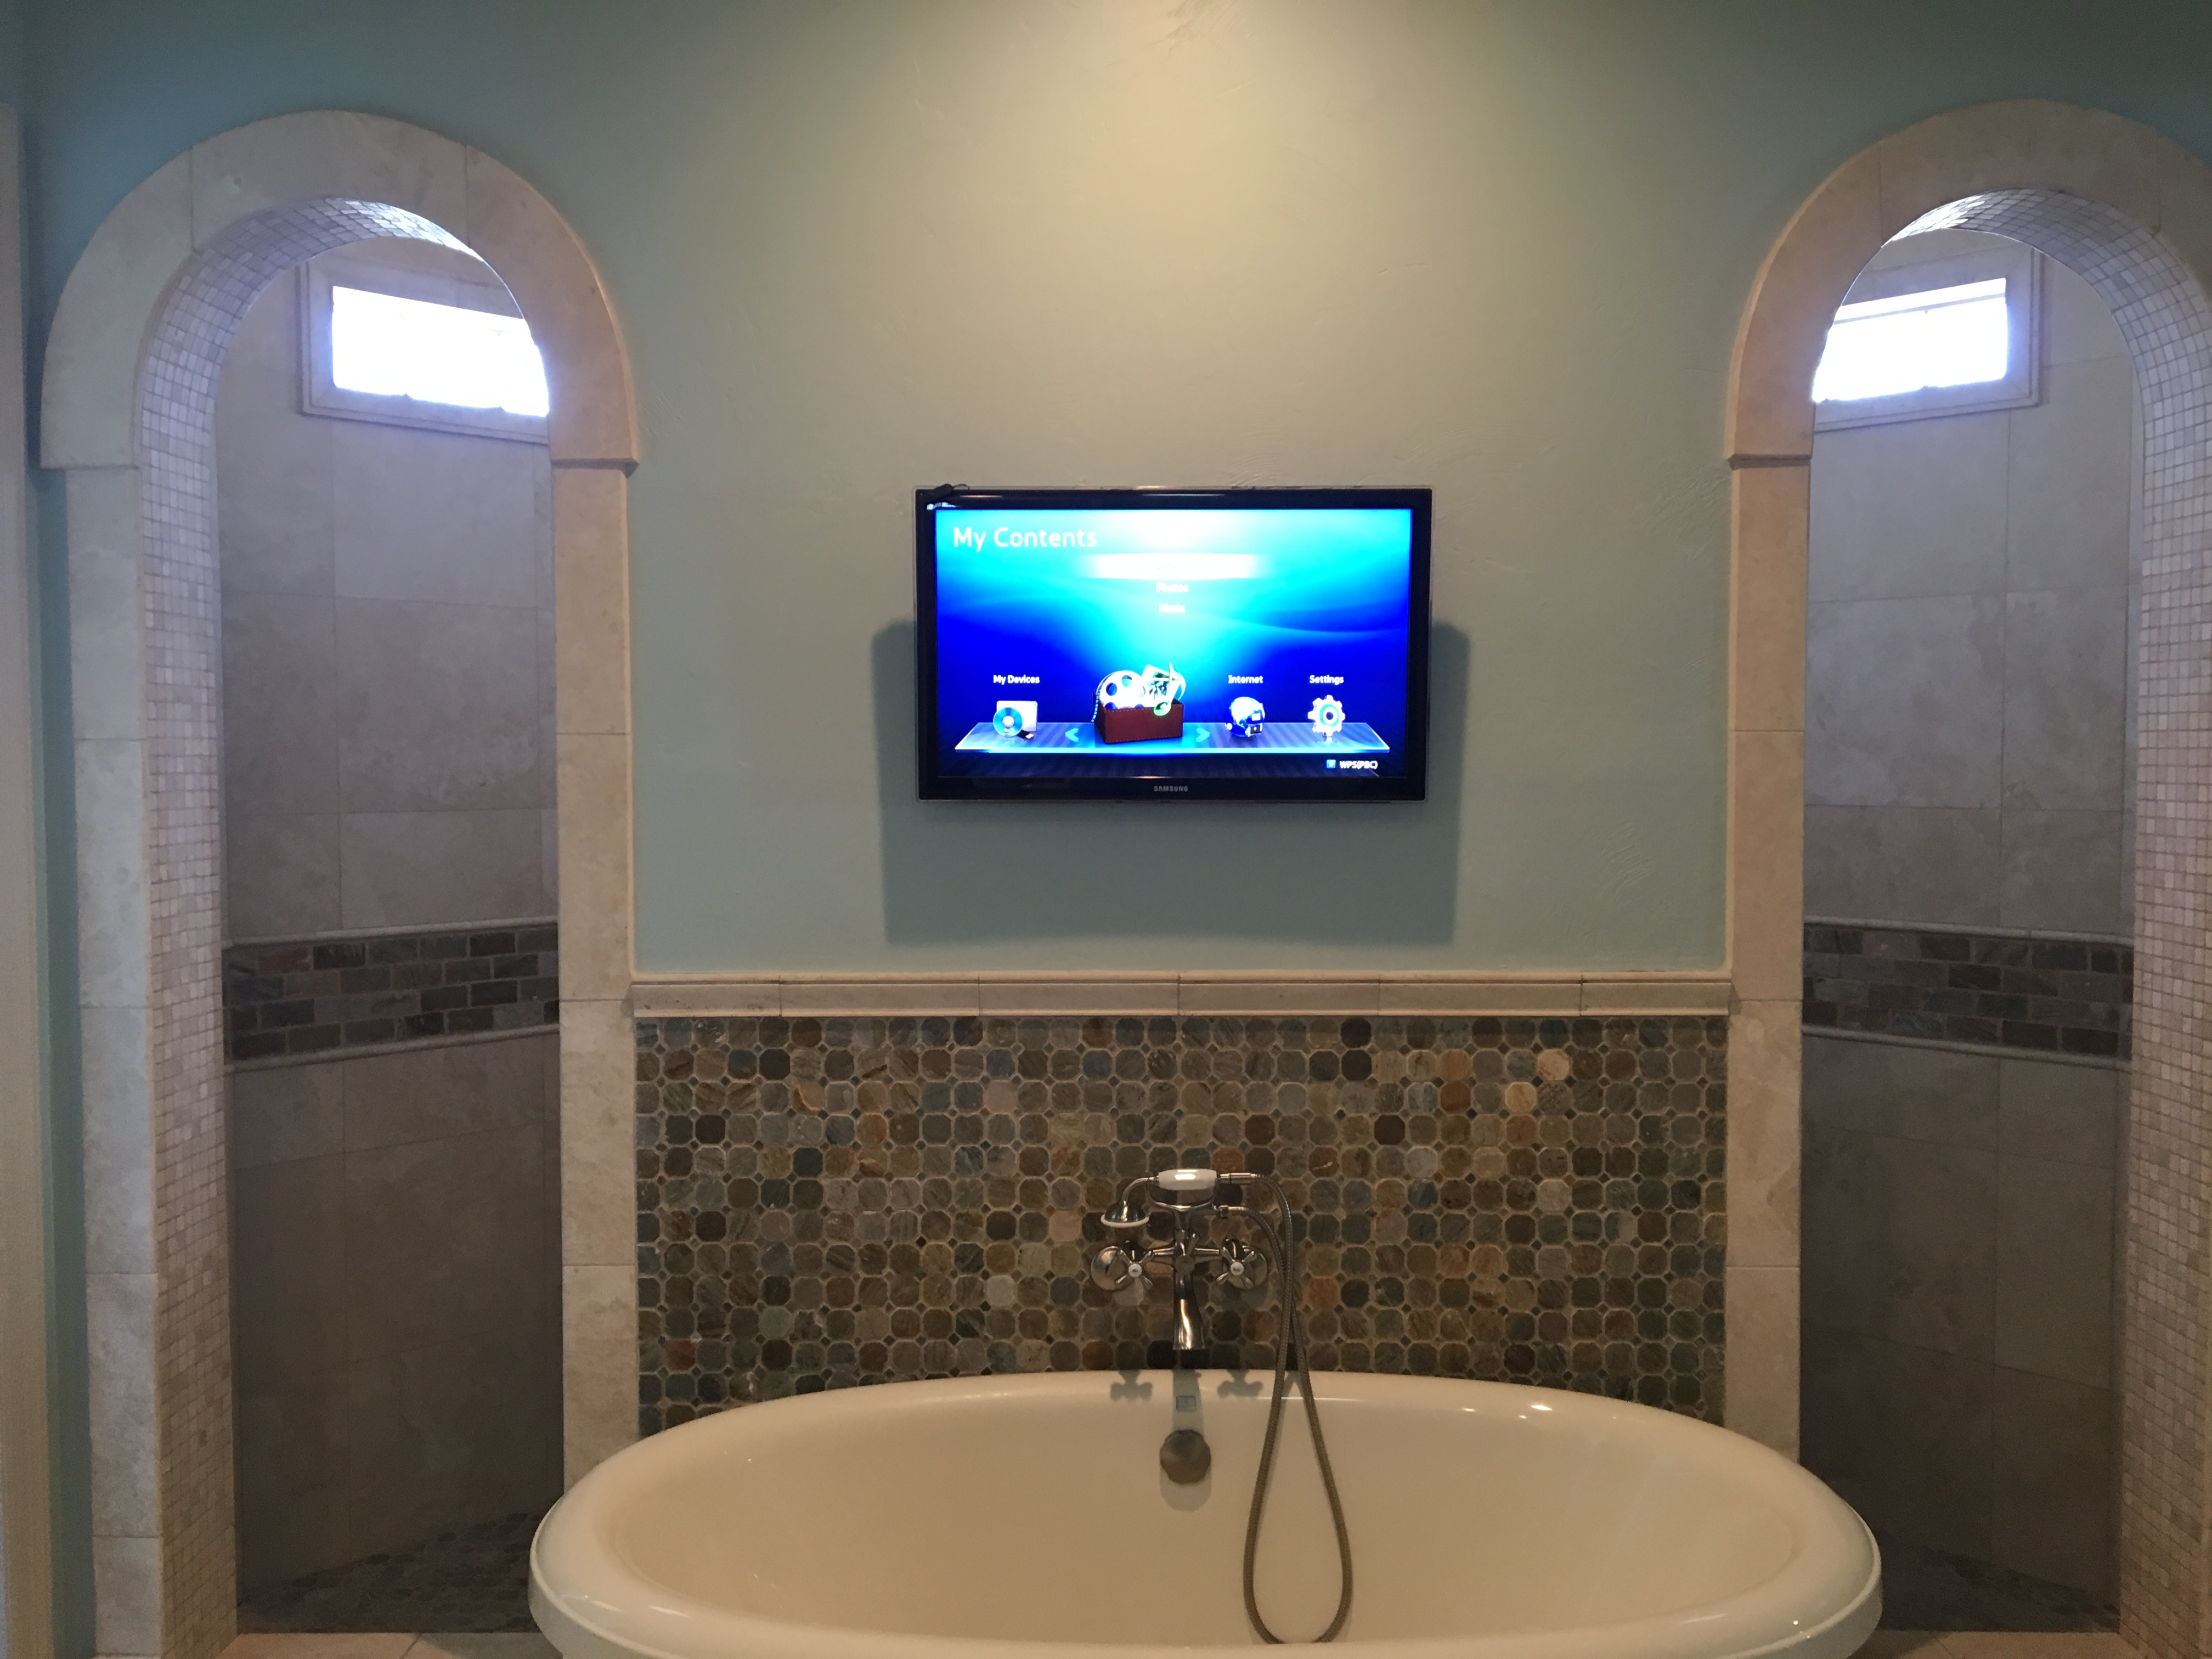 TV installed over bathtub